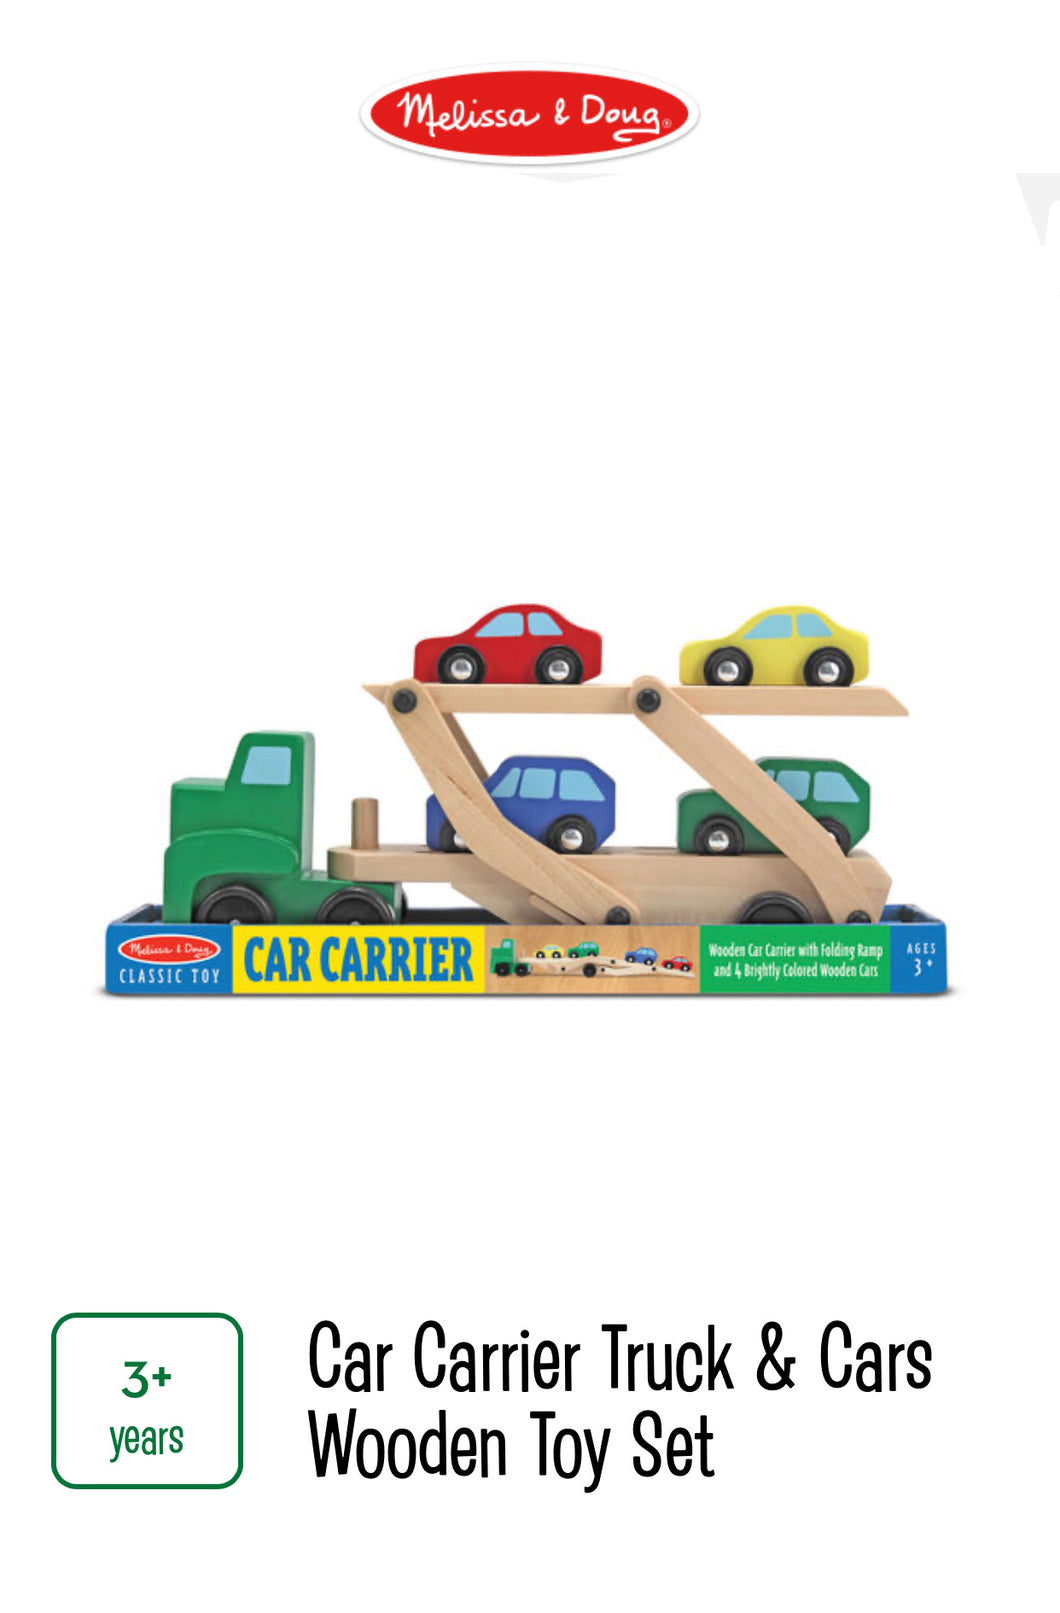 Car Carrier Wooden Toy Set